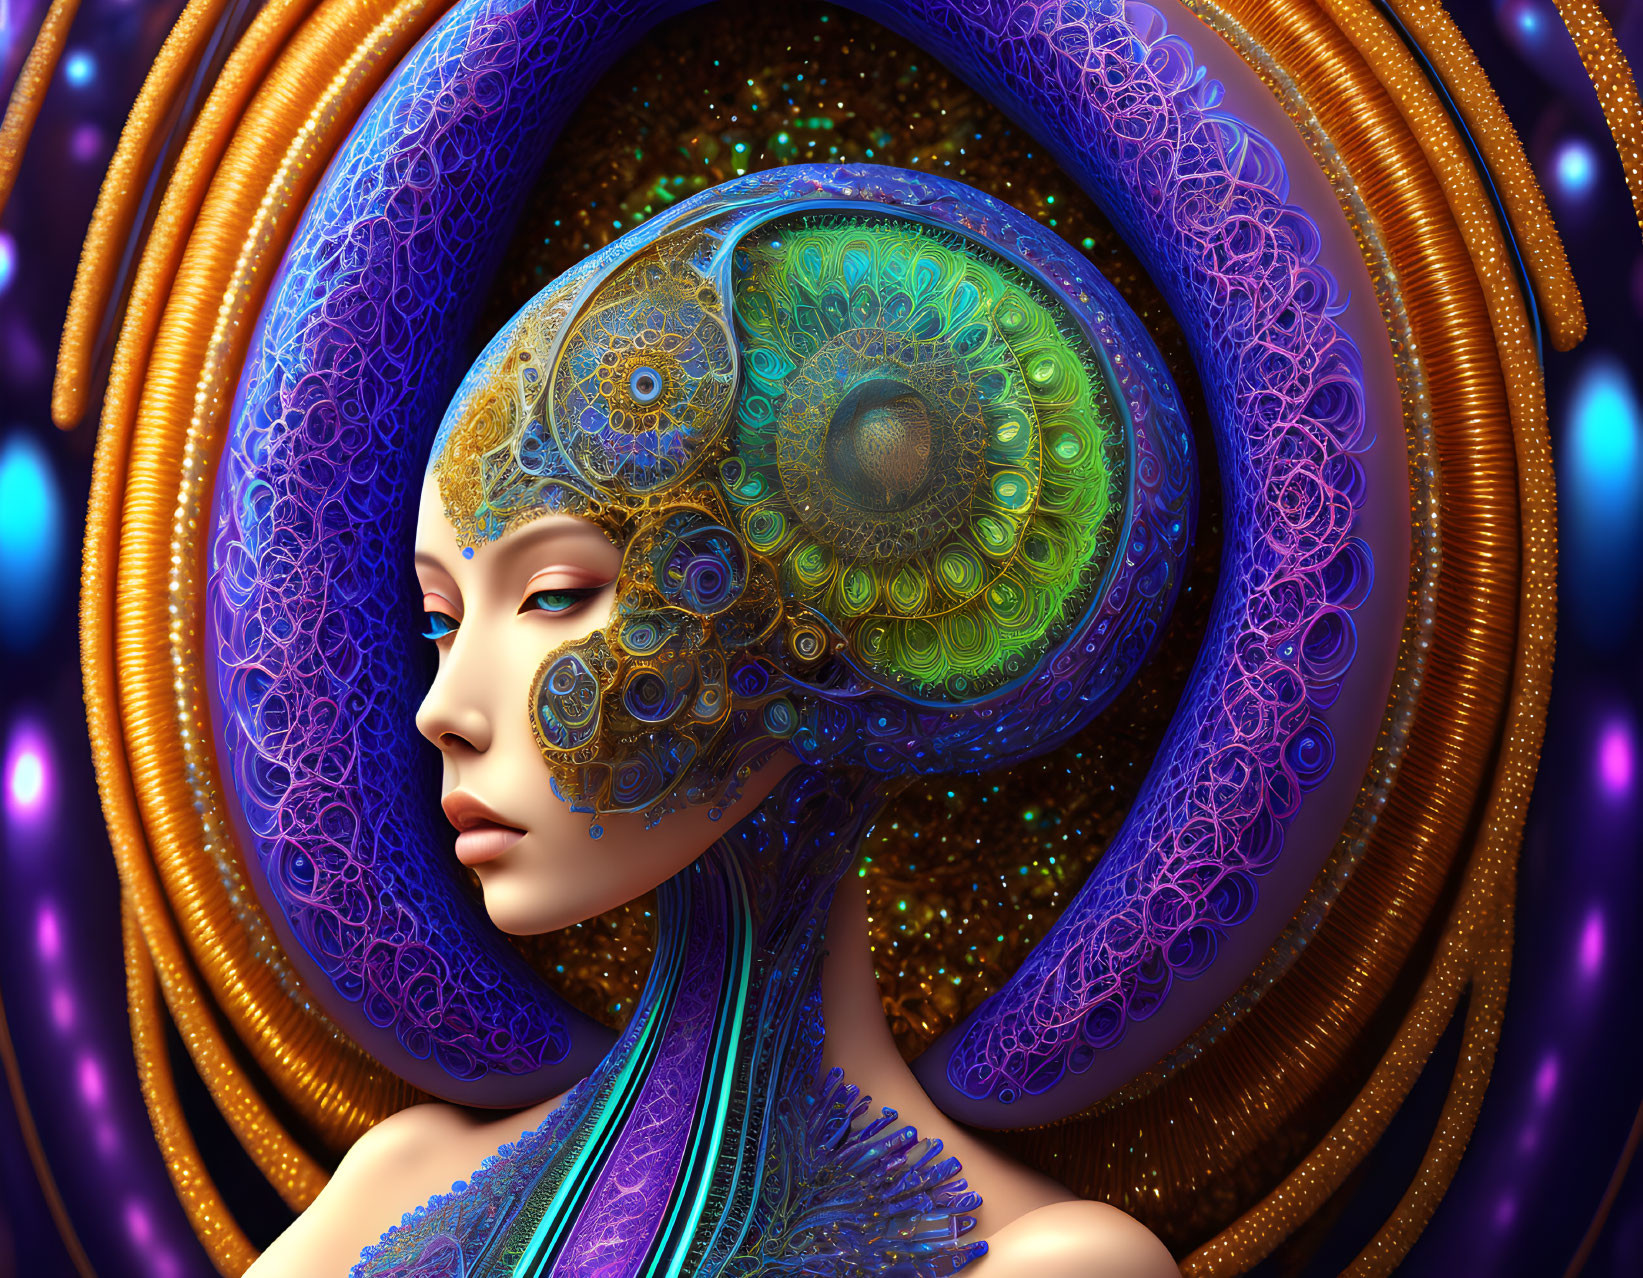 Vibrant digital artwork of a woman with ornate headdress